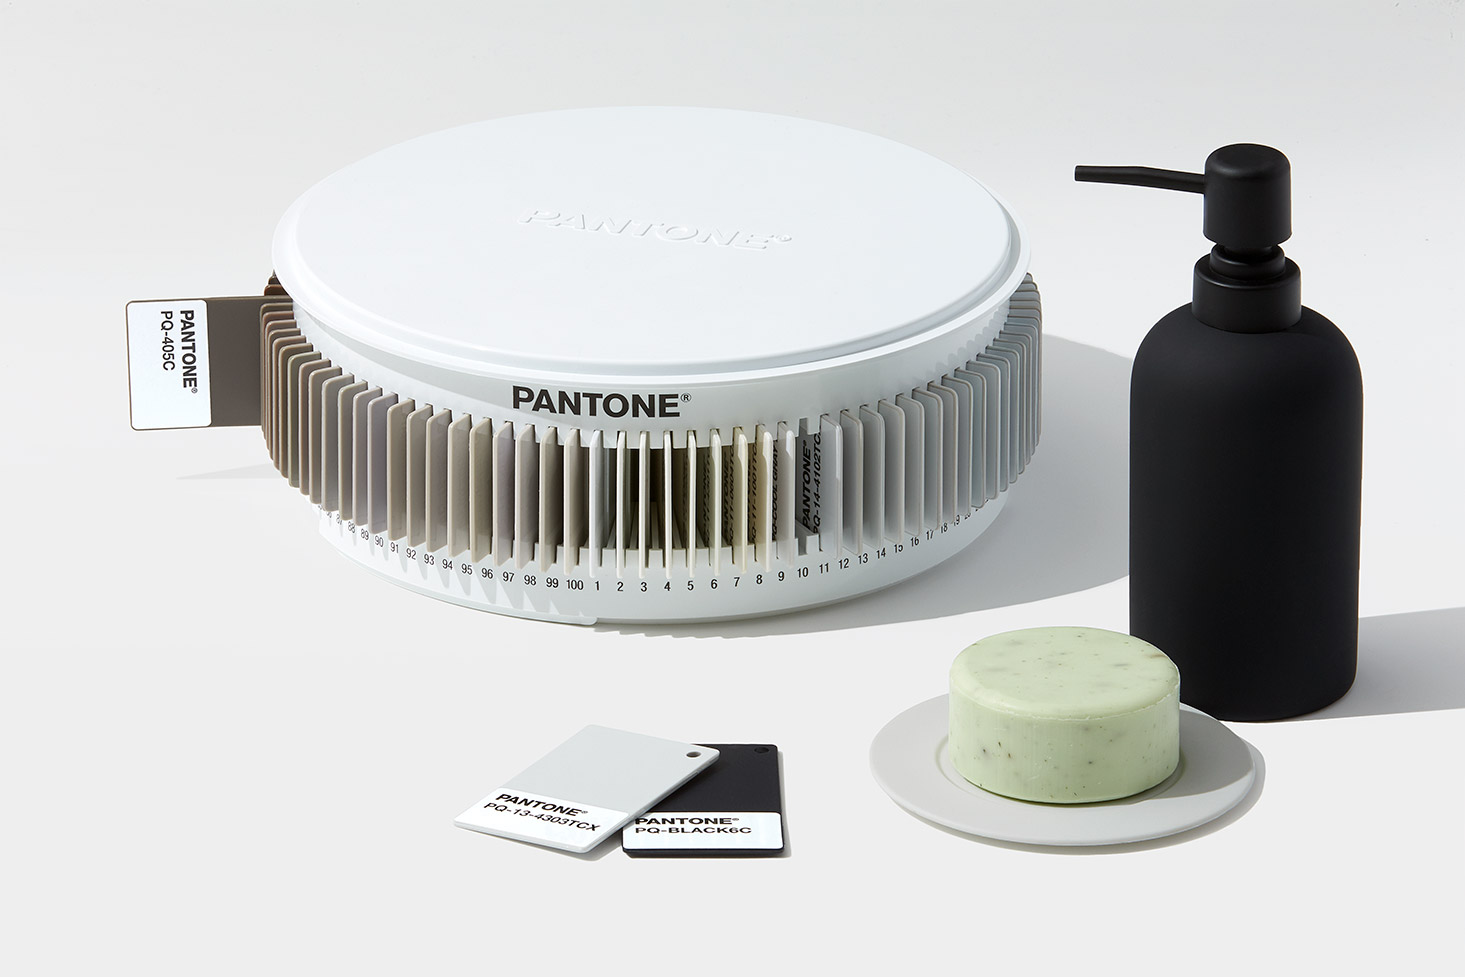 Pantone Plastics Tints and Tones Collection